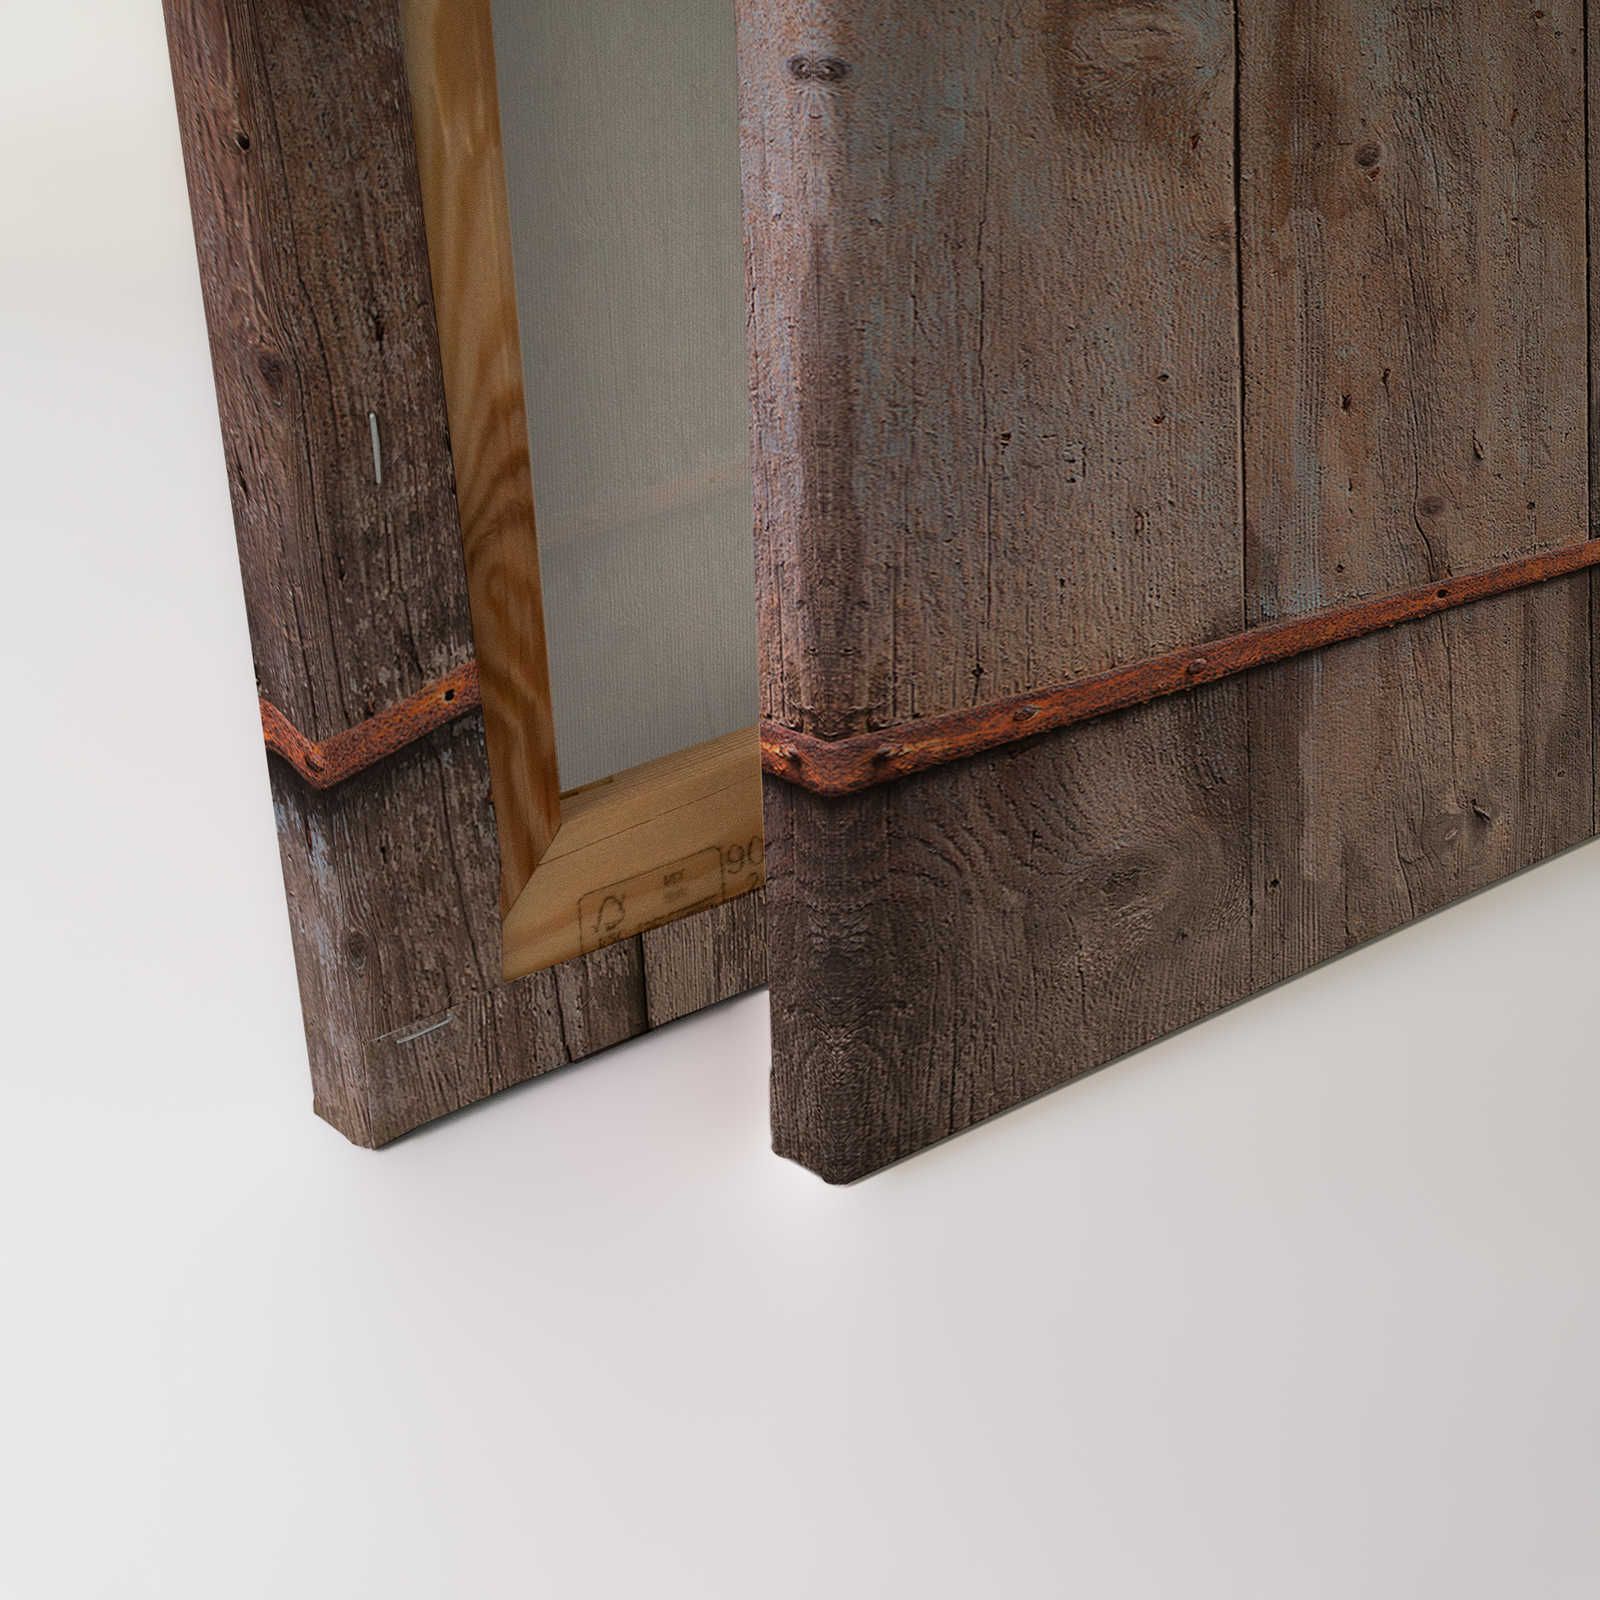             Holz Leinwandbild Scheunentor Bretteroptik im Used Look – 0,90 m x 0,60 m
        